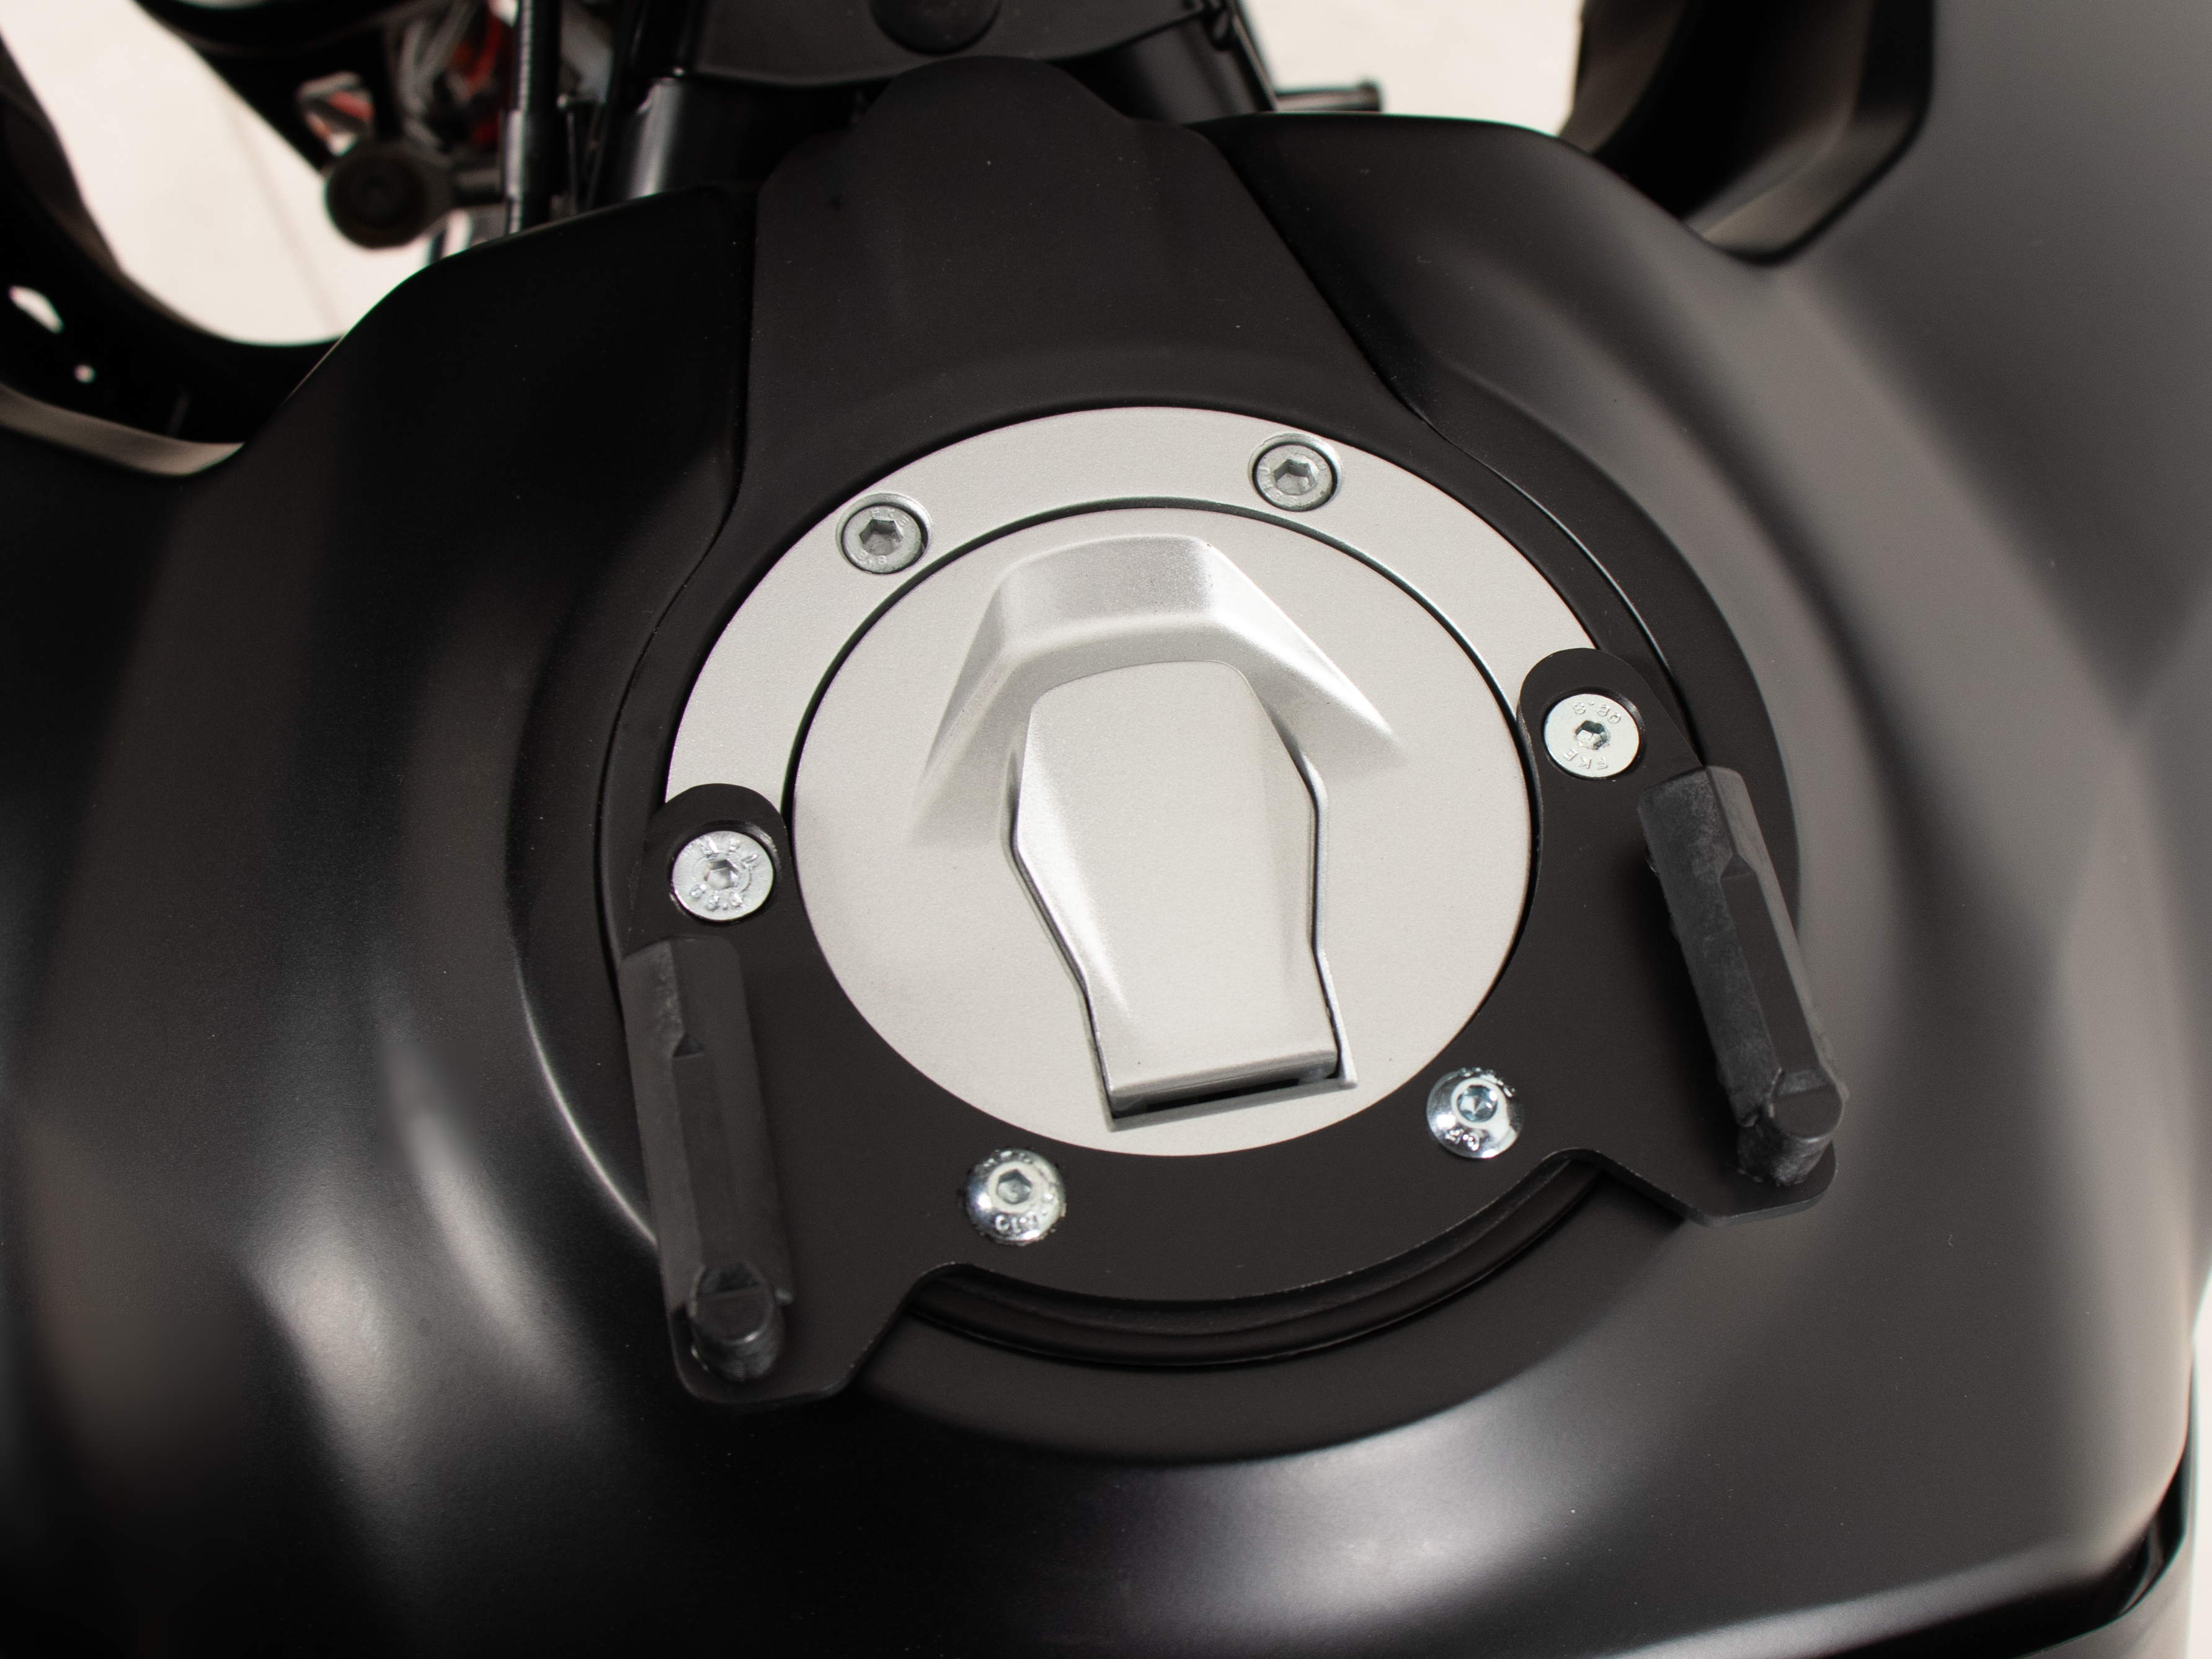 Tankring Lock-it incl. fastener for tankbag for KTM 390 Adventure (2020-)